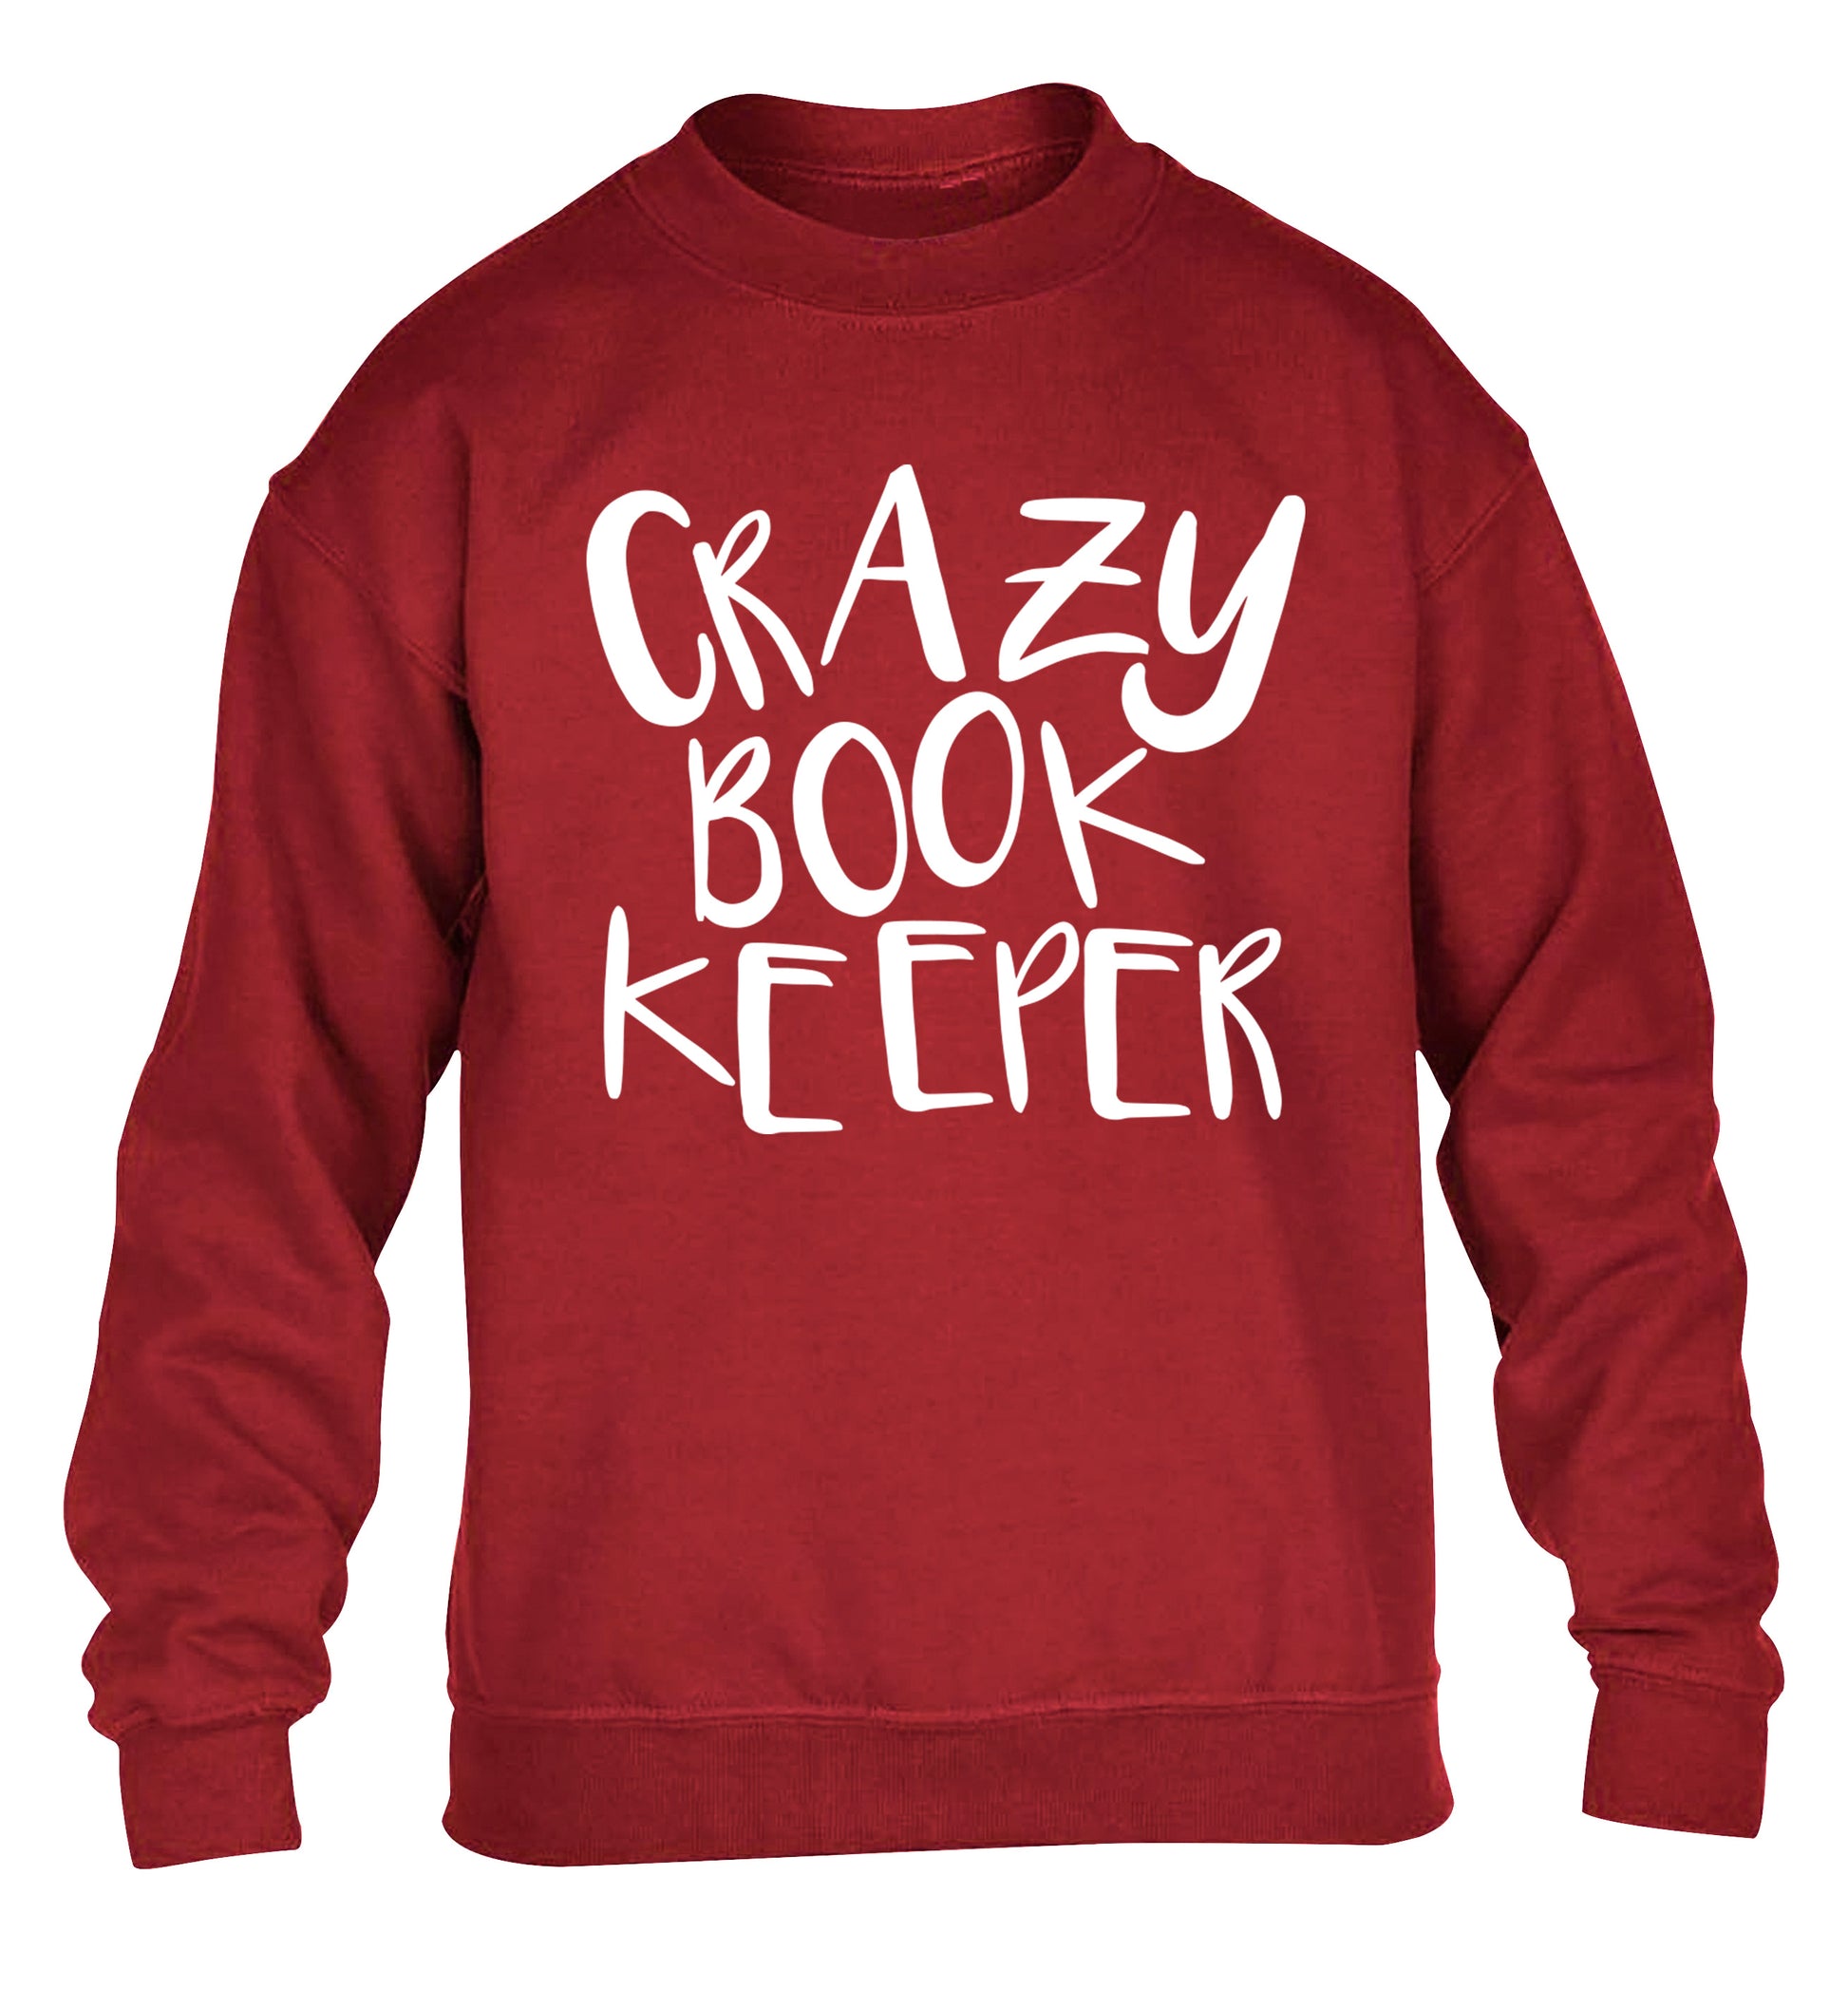 Crazy bookkeeper children's grey sweater 12-13 Years